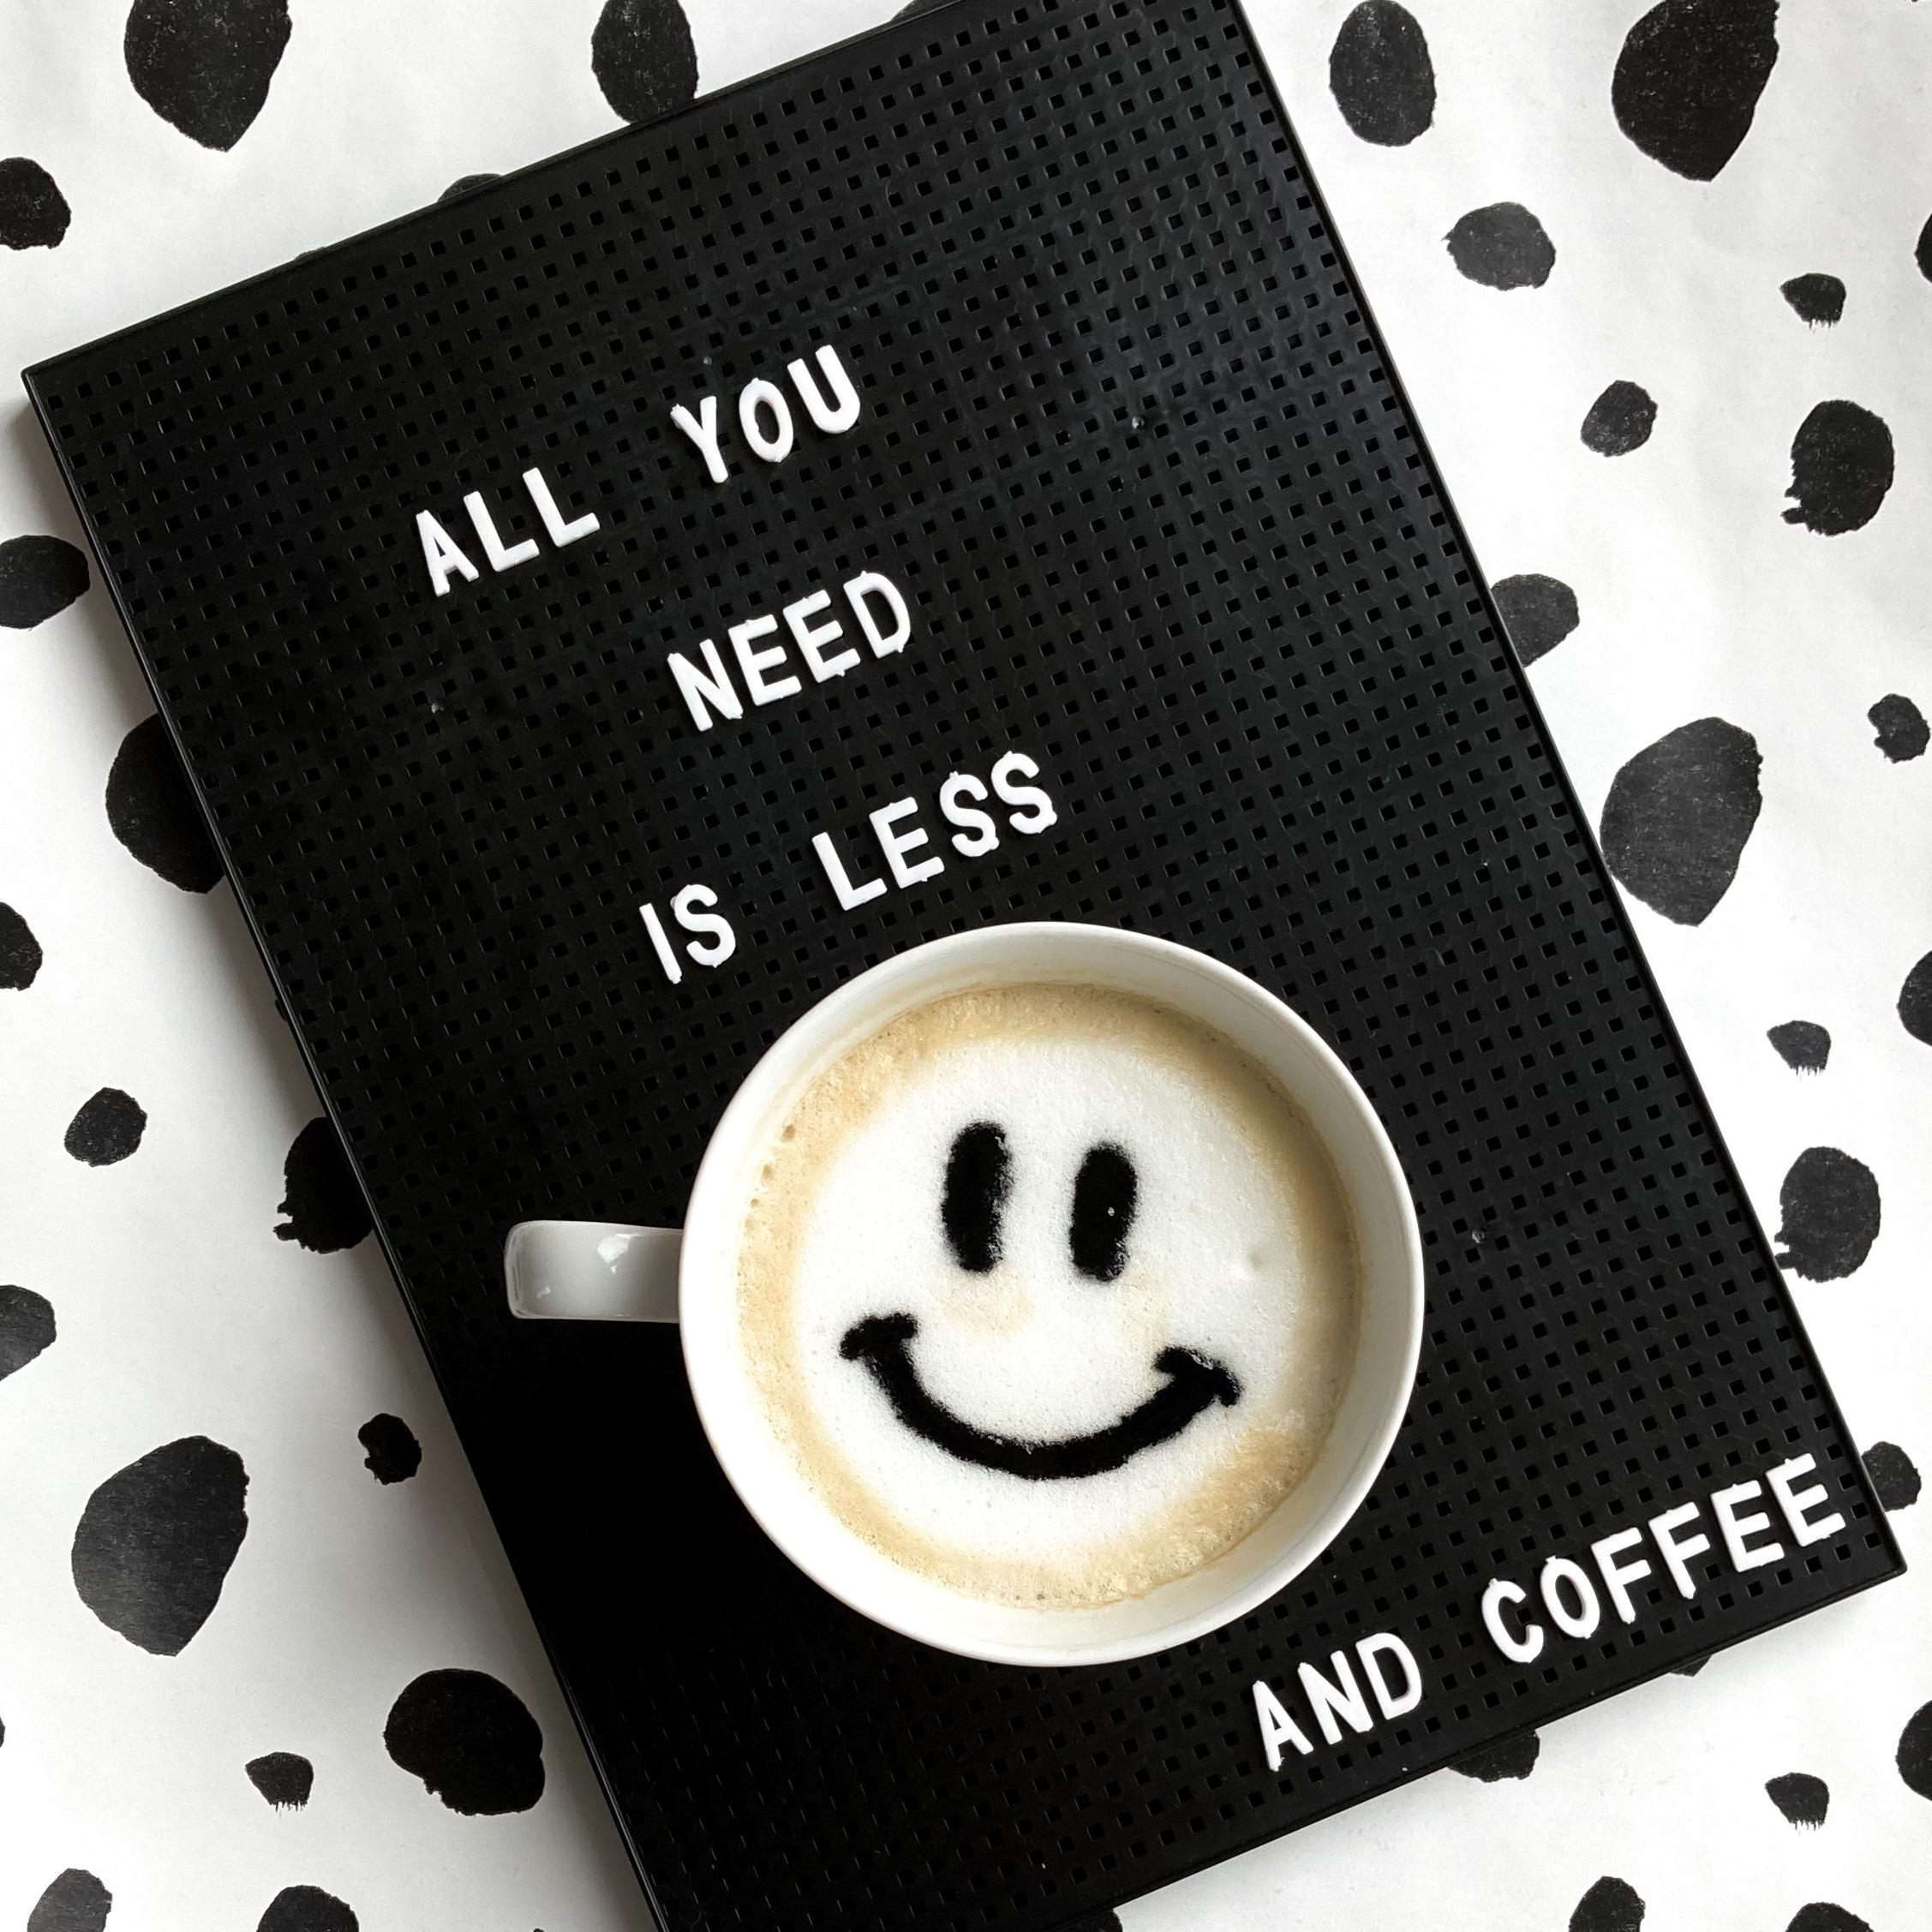 All you need is less. And coffee. #schwarzweiss #minimalismus #minimalism #kaffee #kaffeeliebe #blackandwhite